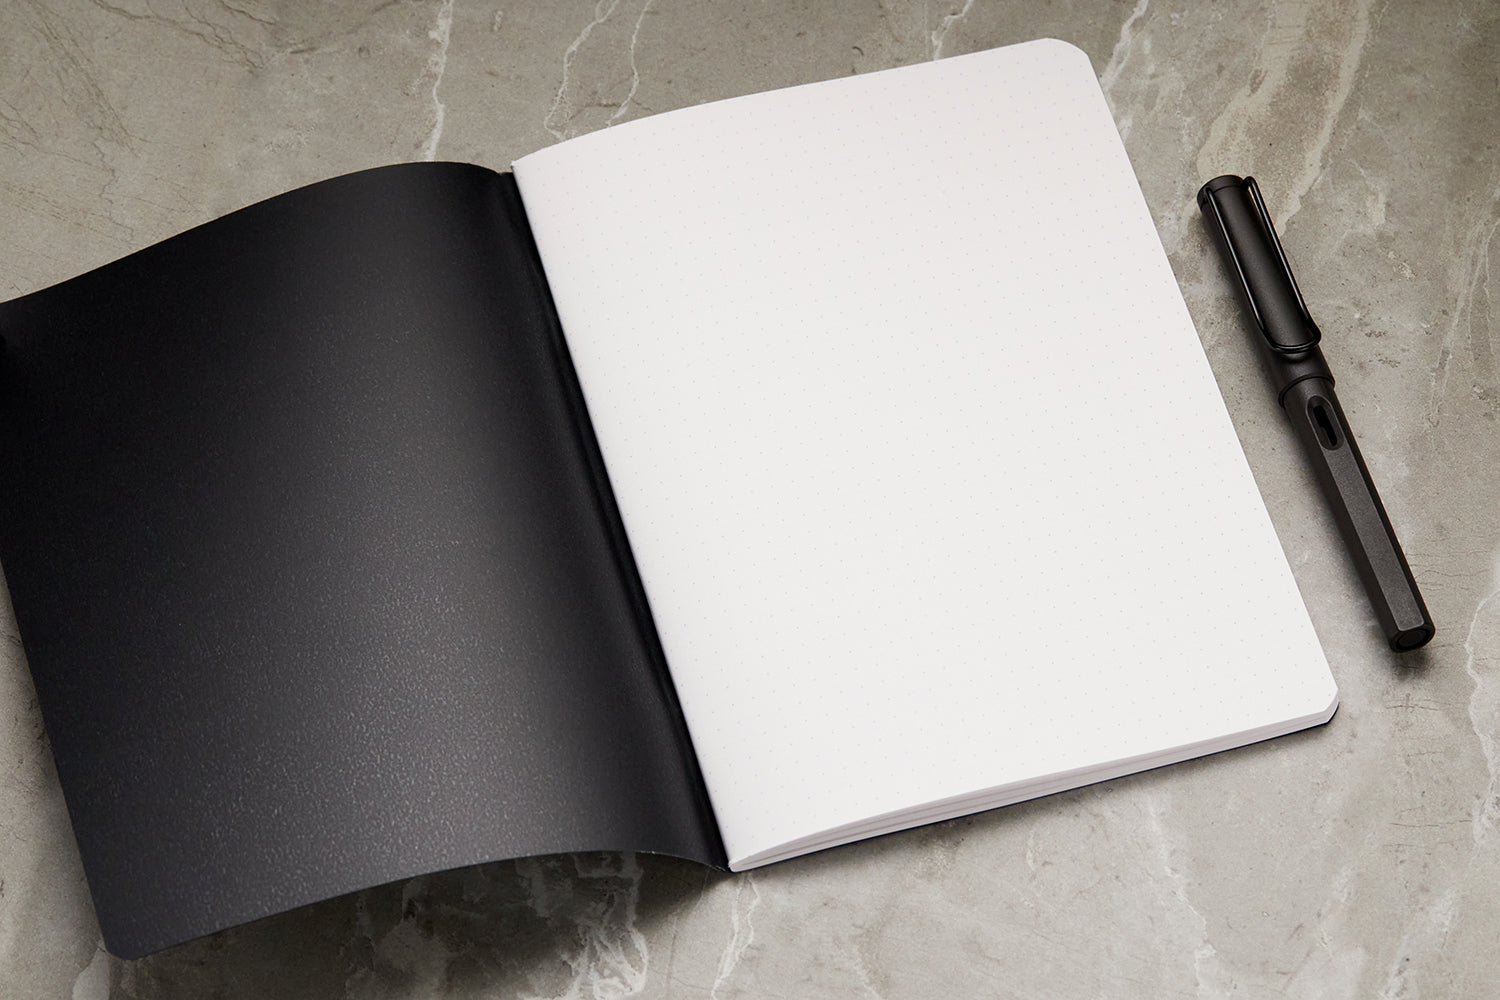 Rhodia Classic Side Staplebound A4 Notebook - Black, Dot Grid